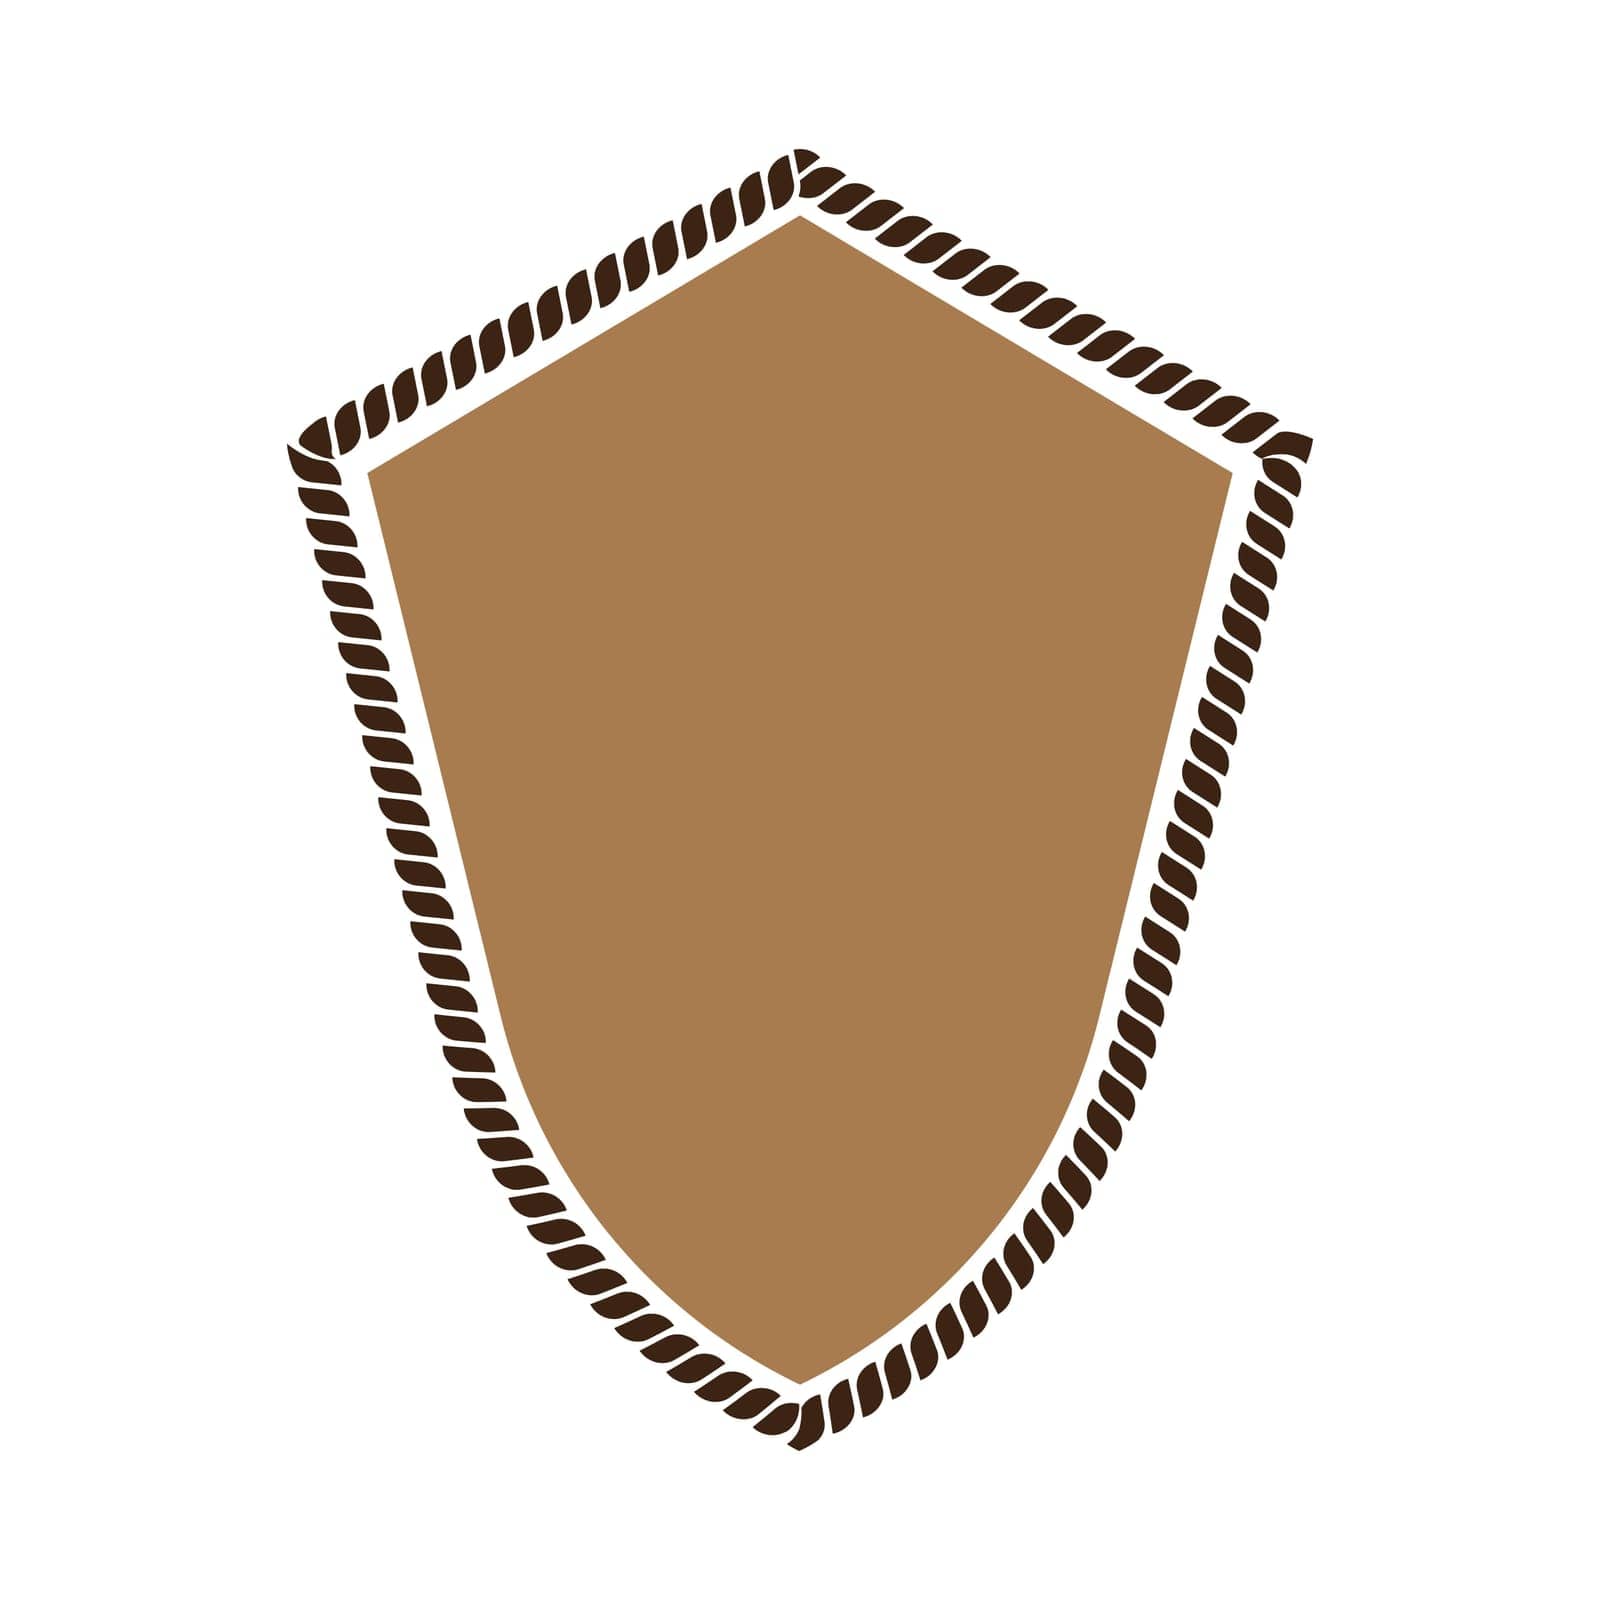 Shield logo vector illustration template design